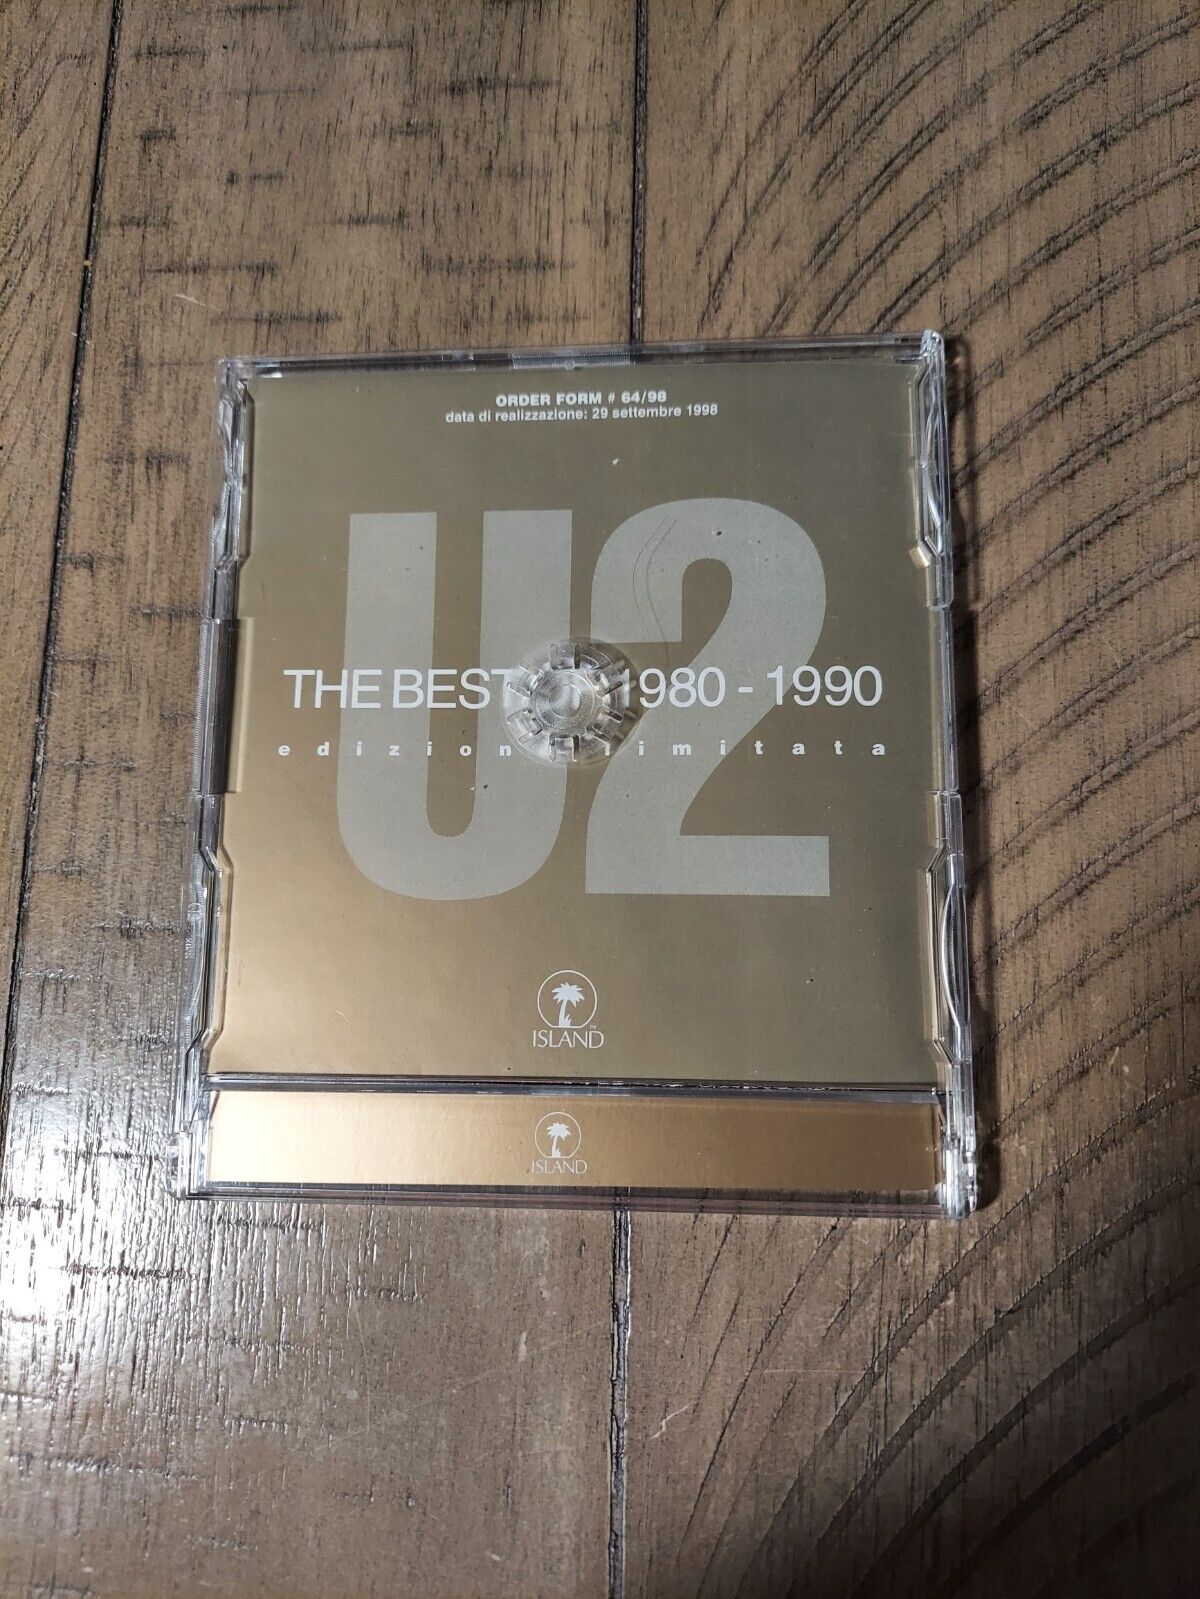 U2 - The Best of 1980 - 1990 -  ITALIAN PROMO Calendar - CD Size / Very Rare /NM